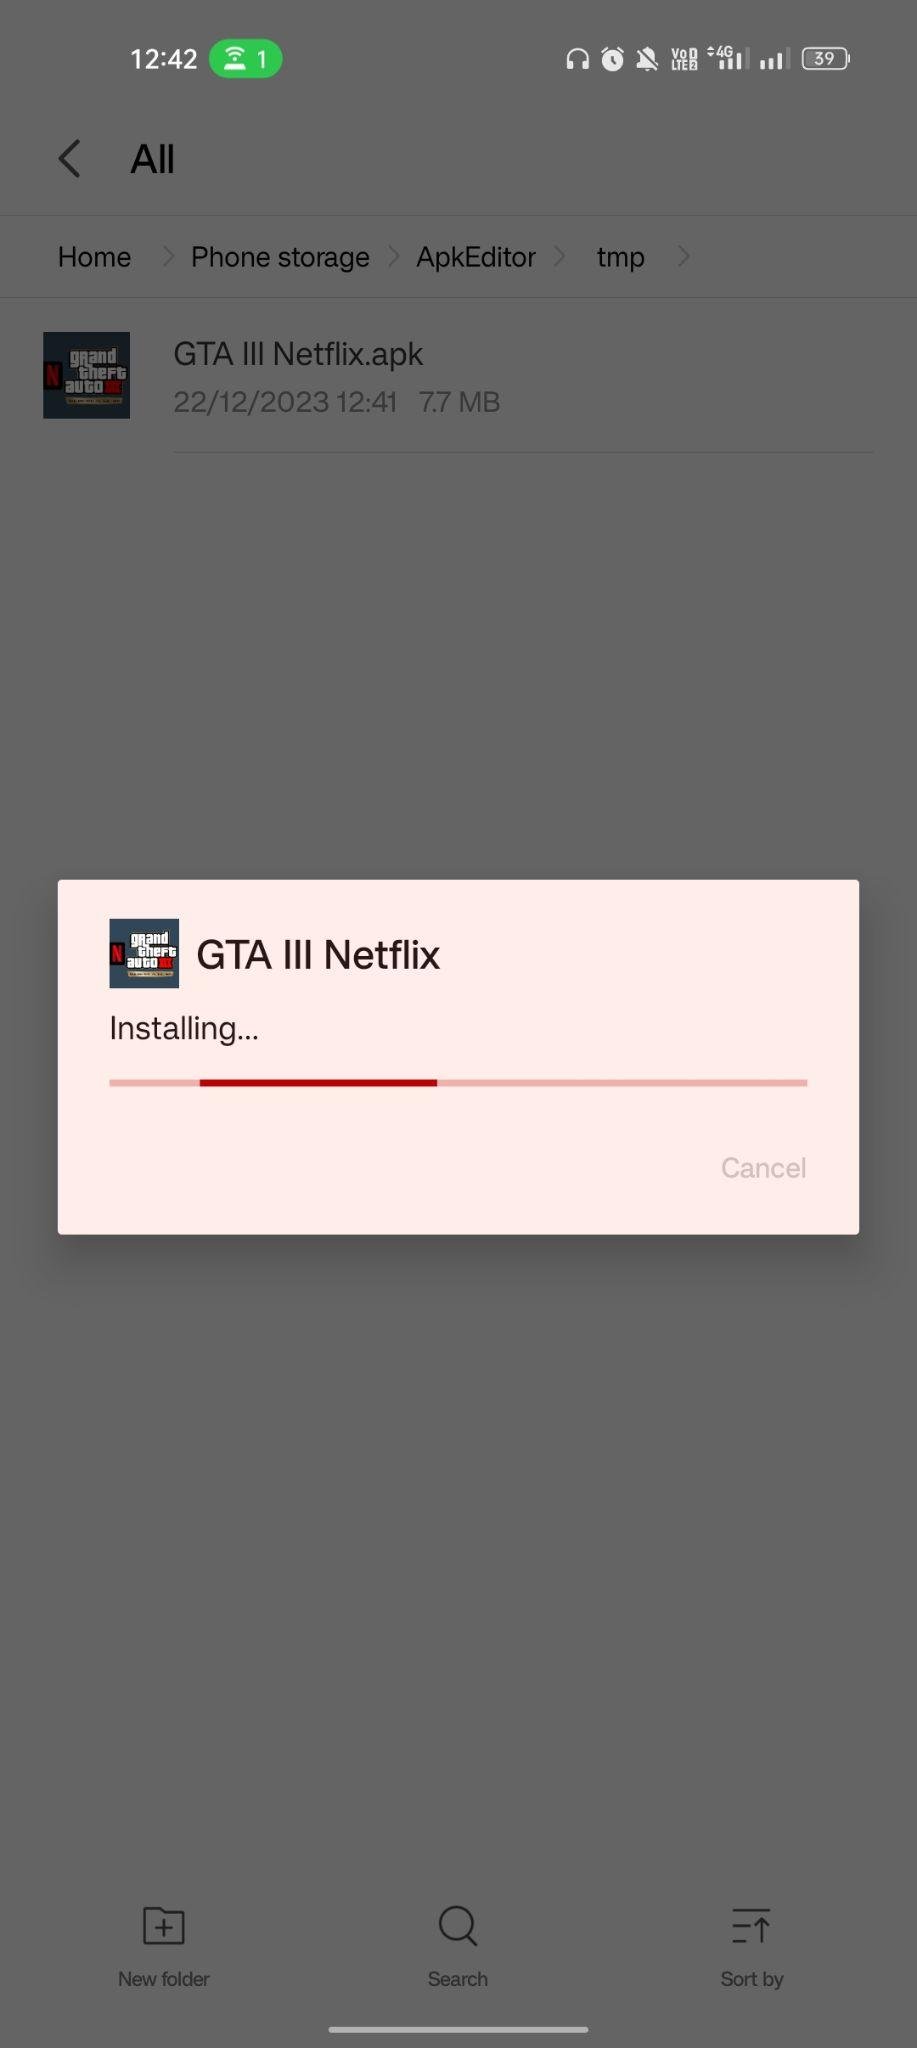 GTA III - Netflix apk installing